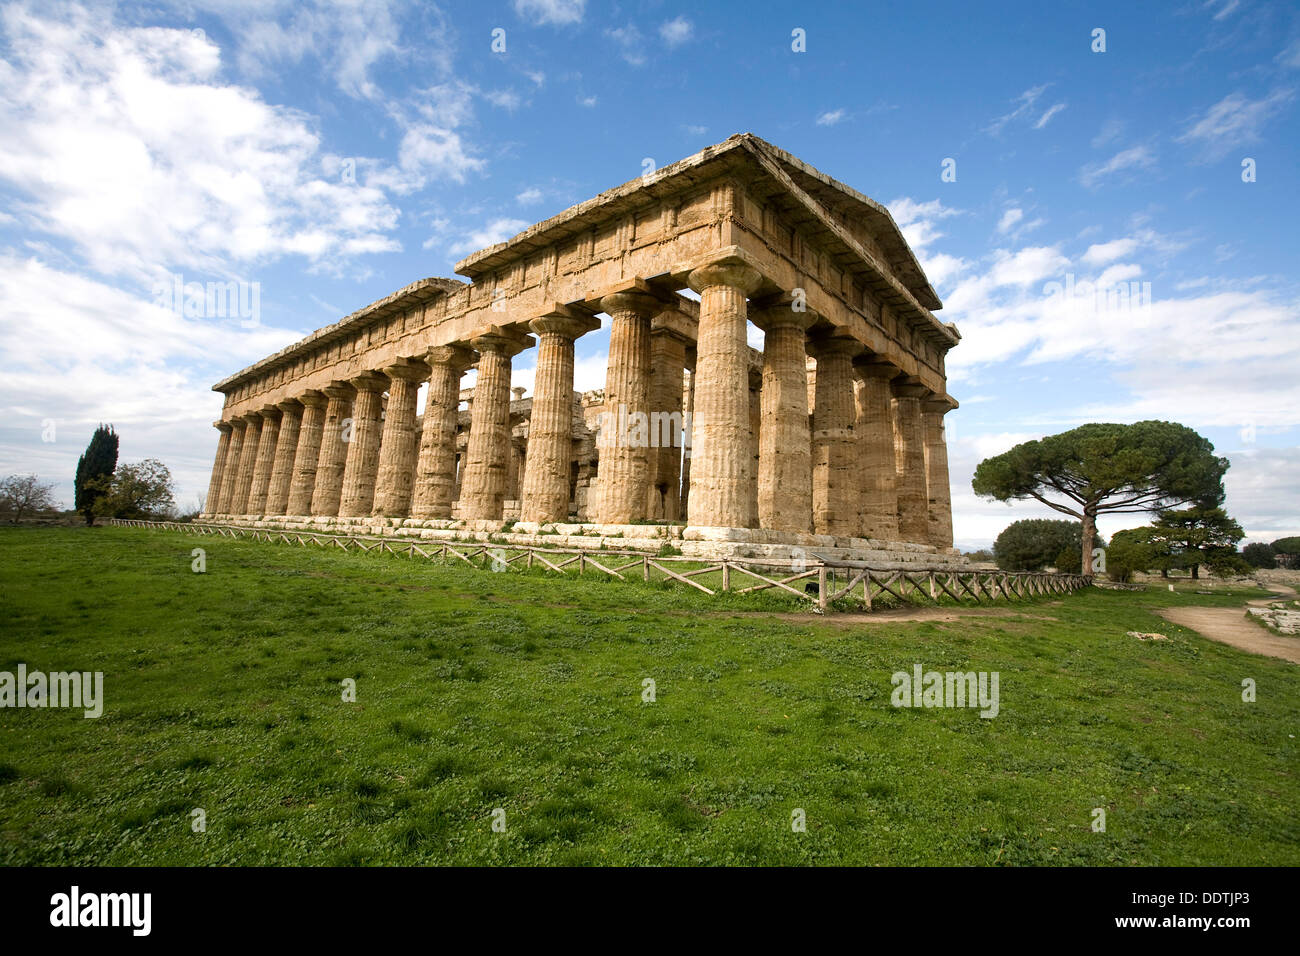 The Temple of Neptune, Peastum, Italy. Artist: Samuel Magal Stock Photo